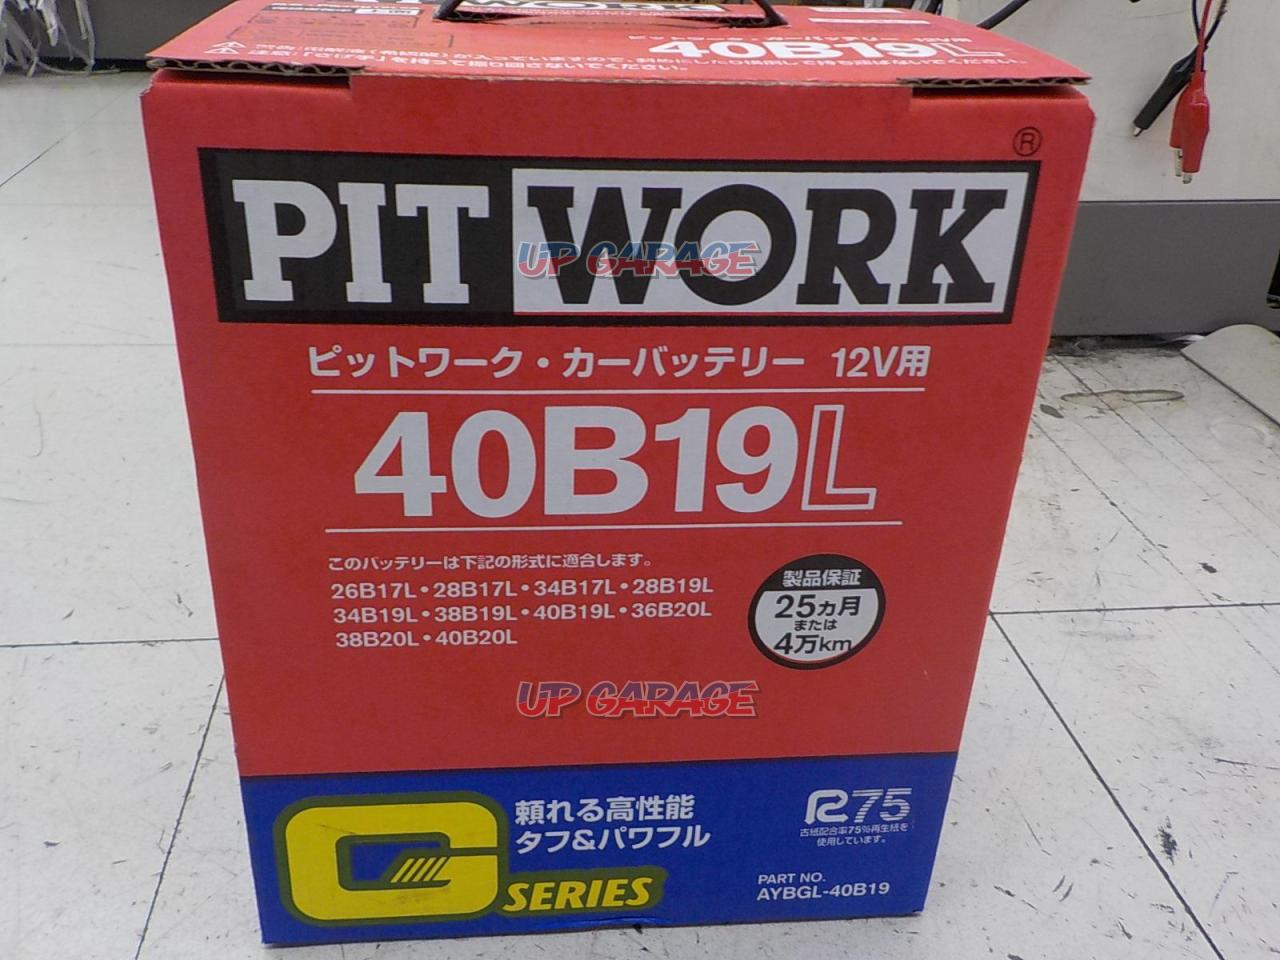 Pitwork G Series Battery 40b19l Batteries Croooober